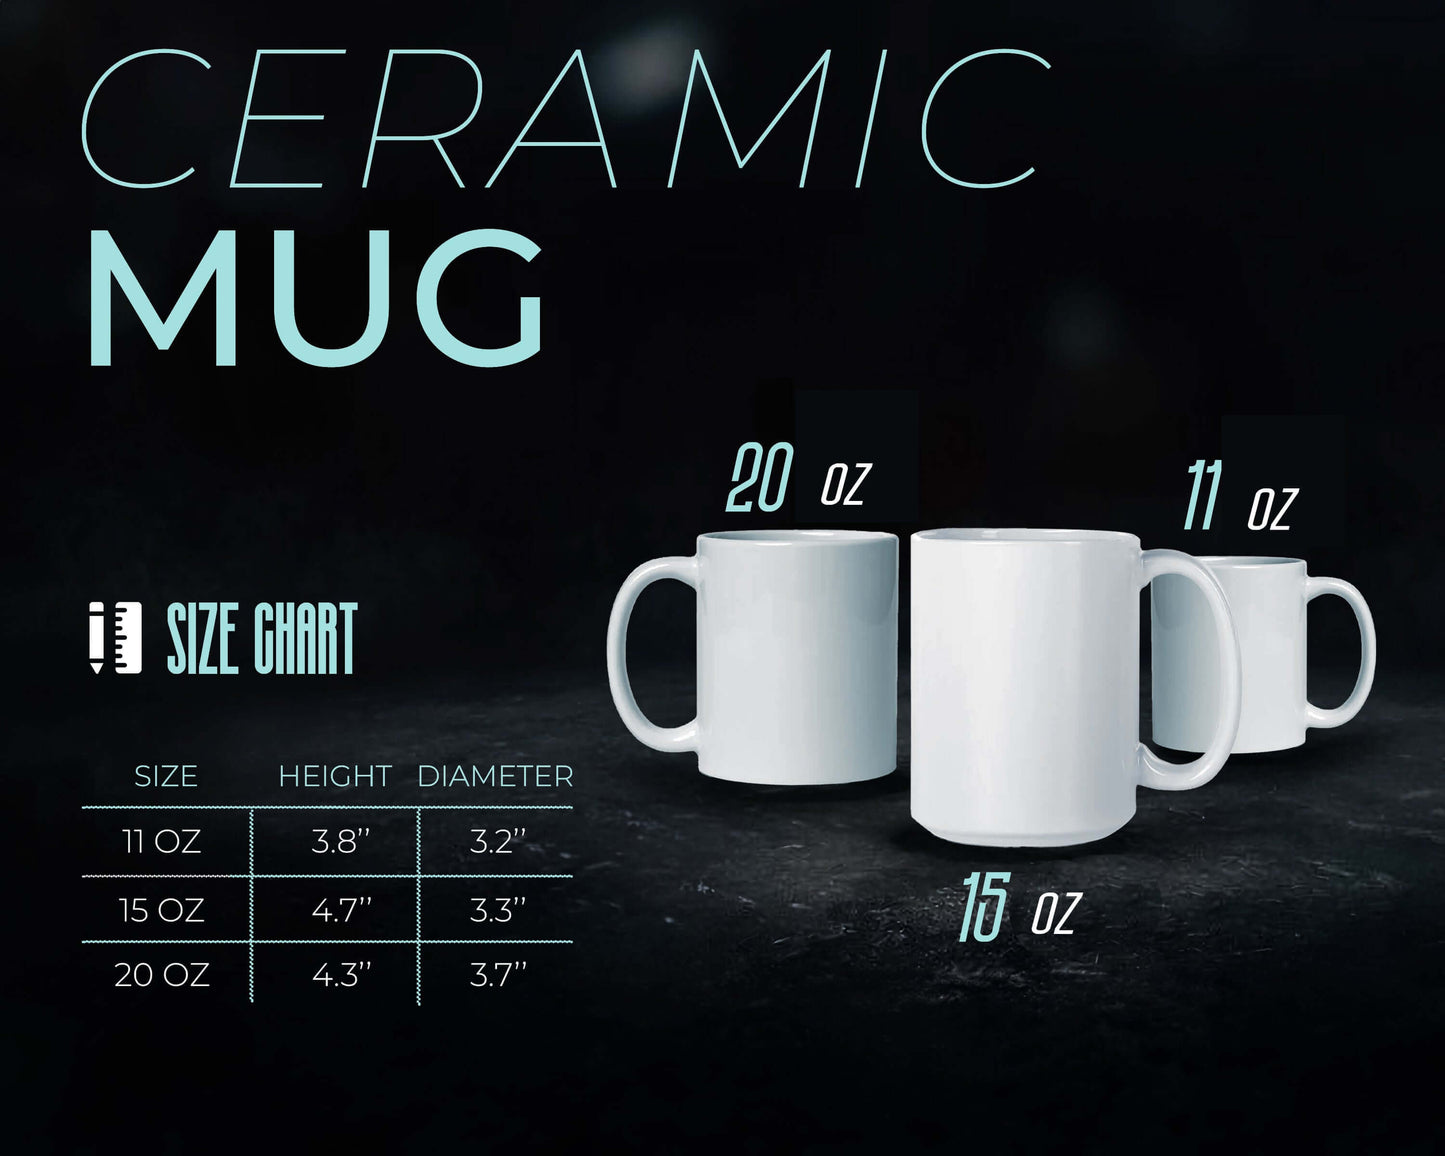 Reproductive Rights ceramic coffee mug. Pro choice Feminist mug